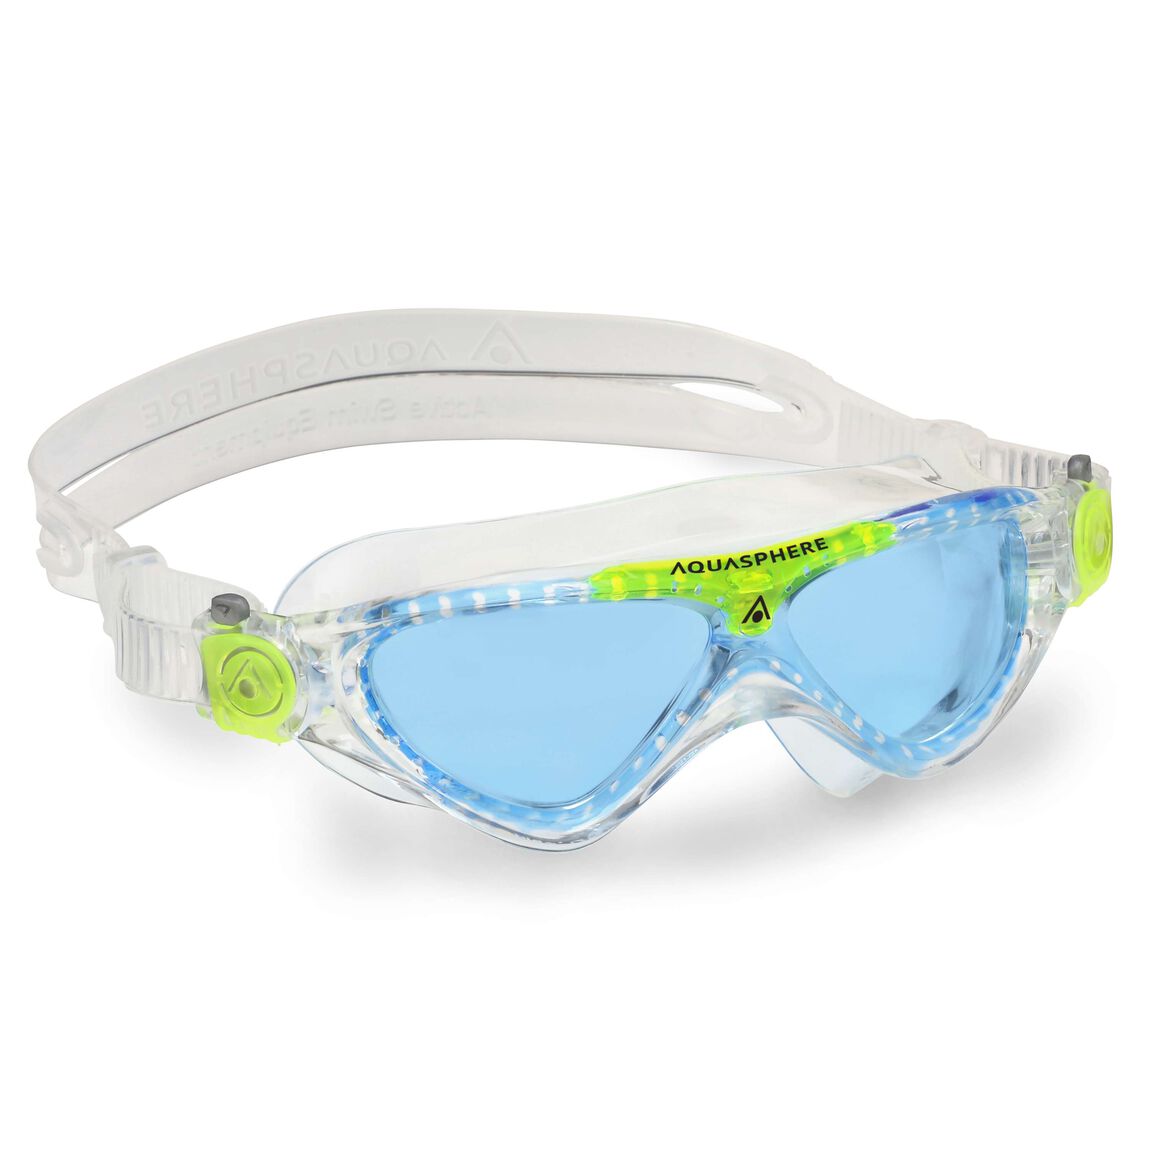 Aquasphere Vista Junior Swim Mask - Transparent/Bright Green